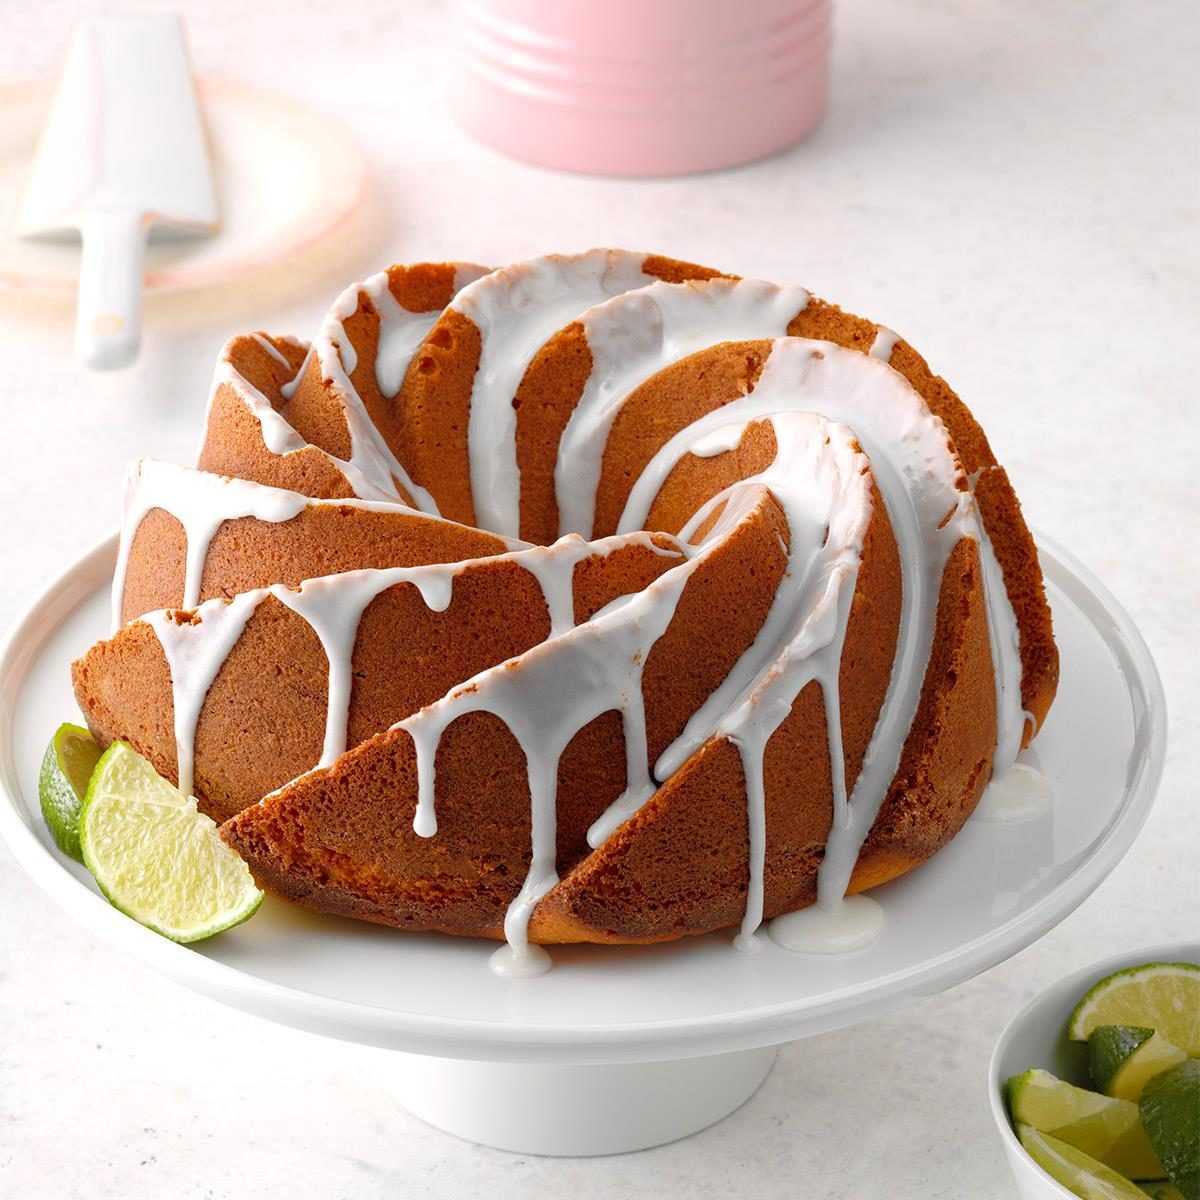 Margarita Cake Recipe: How to Make It